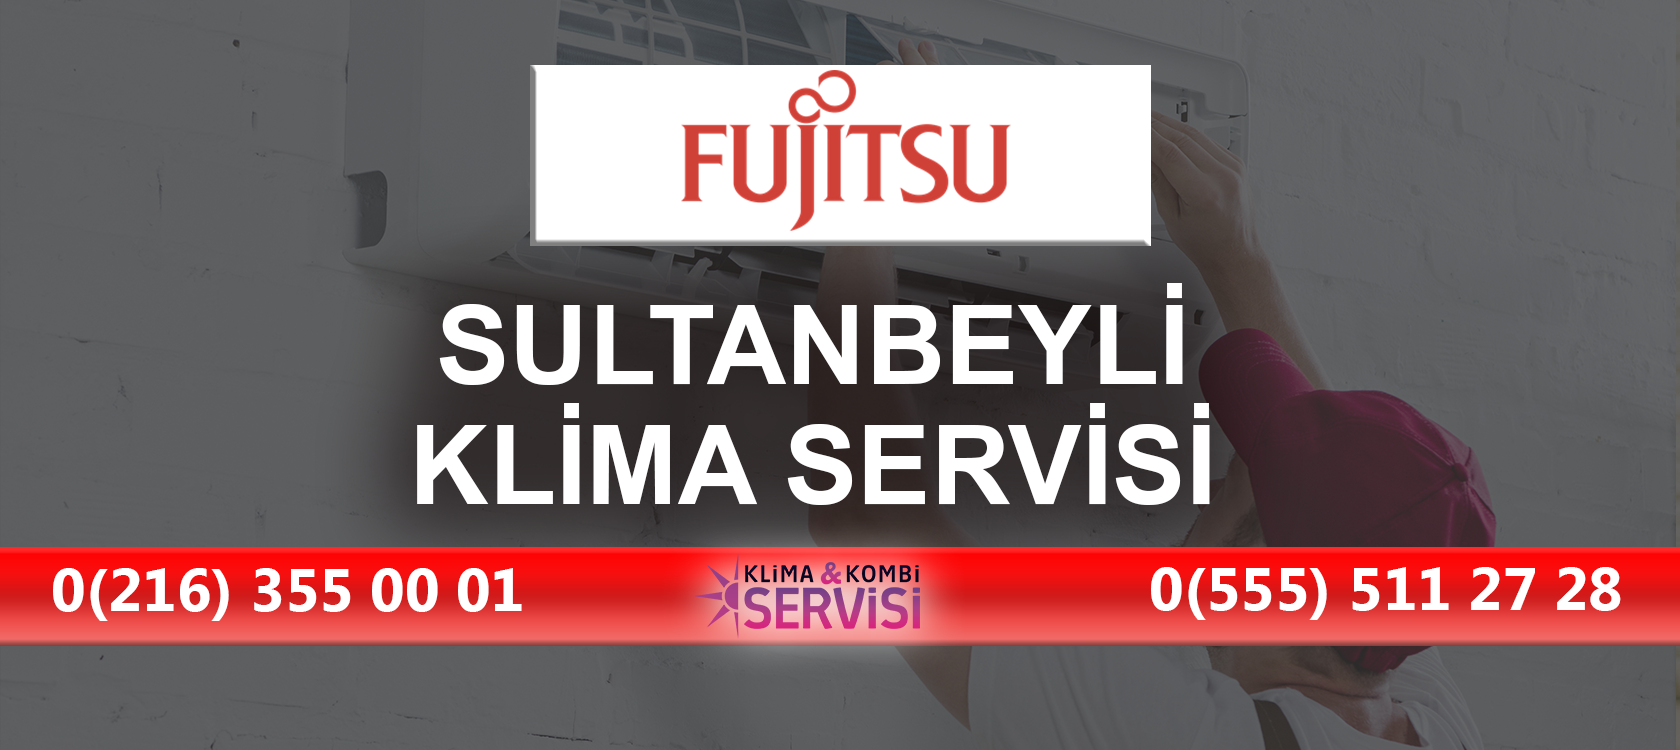 Sultanbeyli Fujitsu Klima Servisi